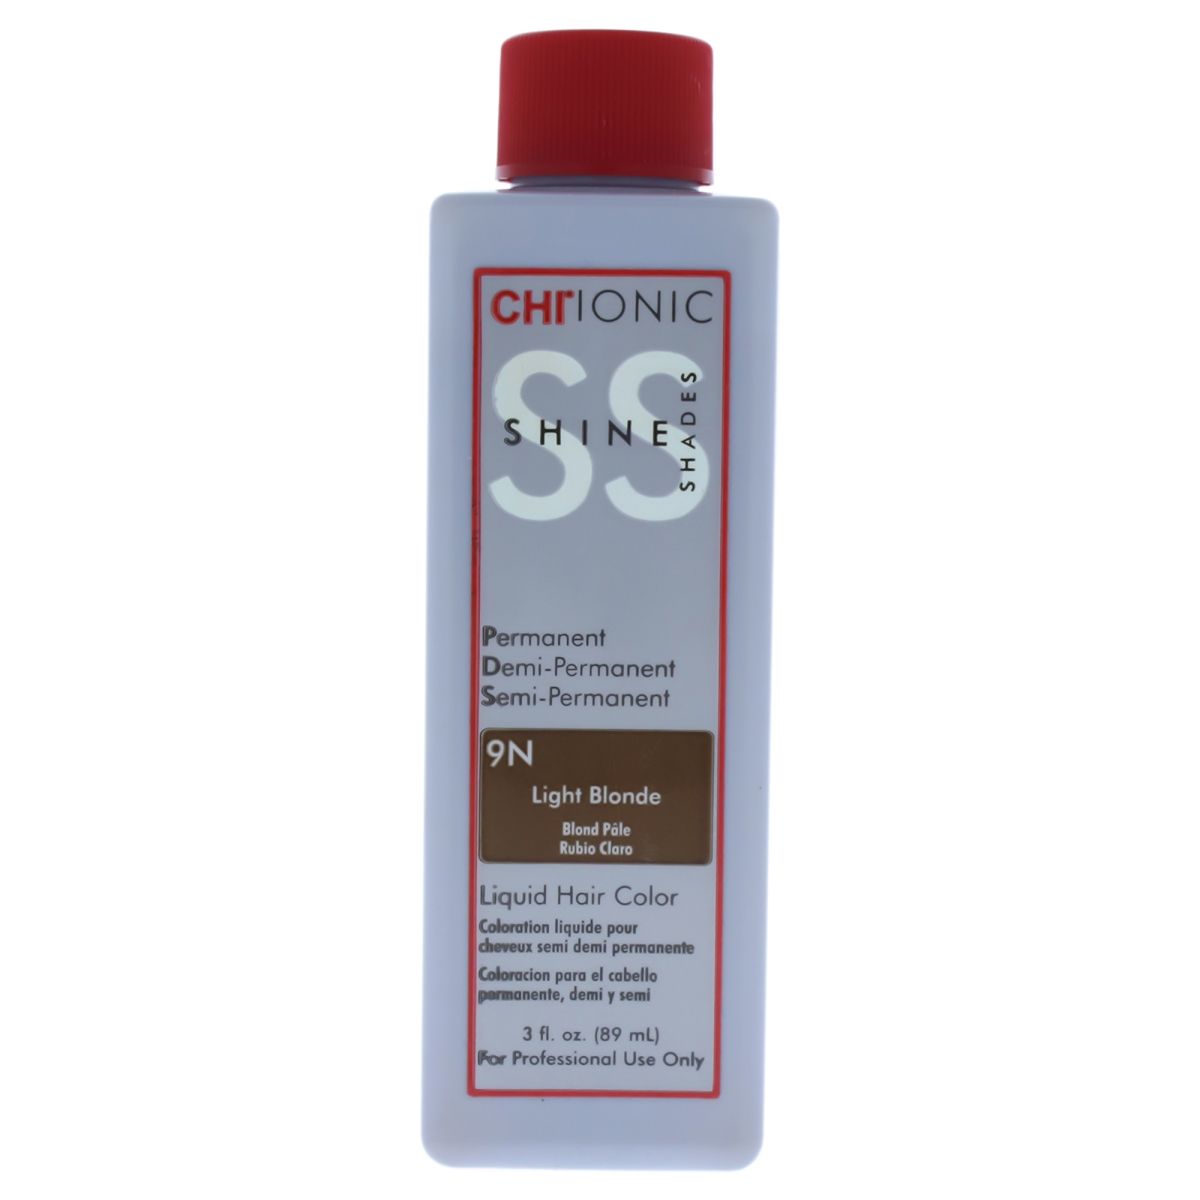 I0084054 Ionic Shine Shades Liquid Hair Color For Unisex - 9n Light Blonde - 3 Oz